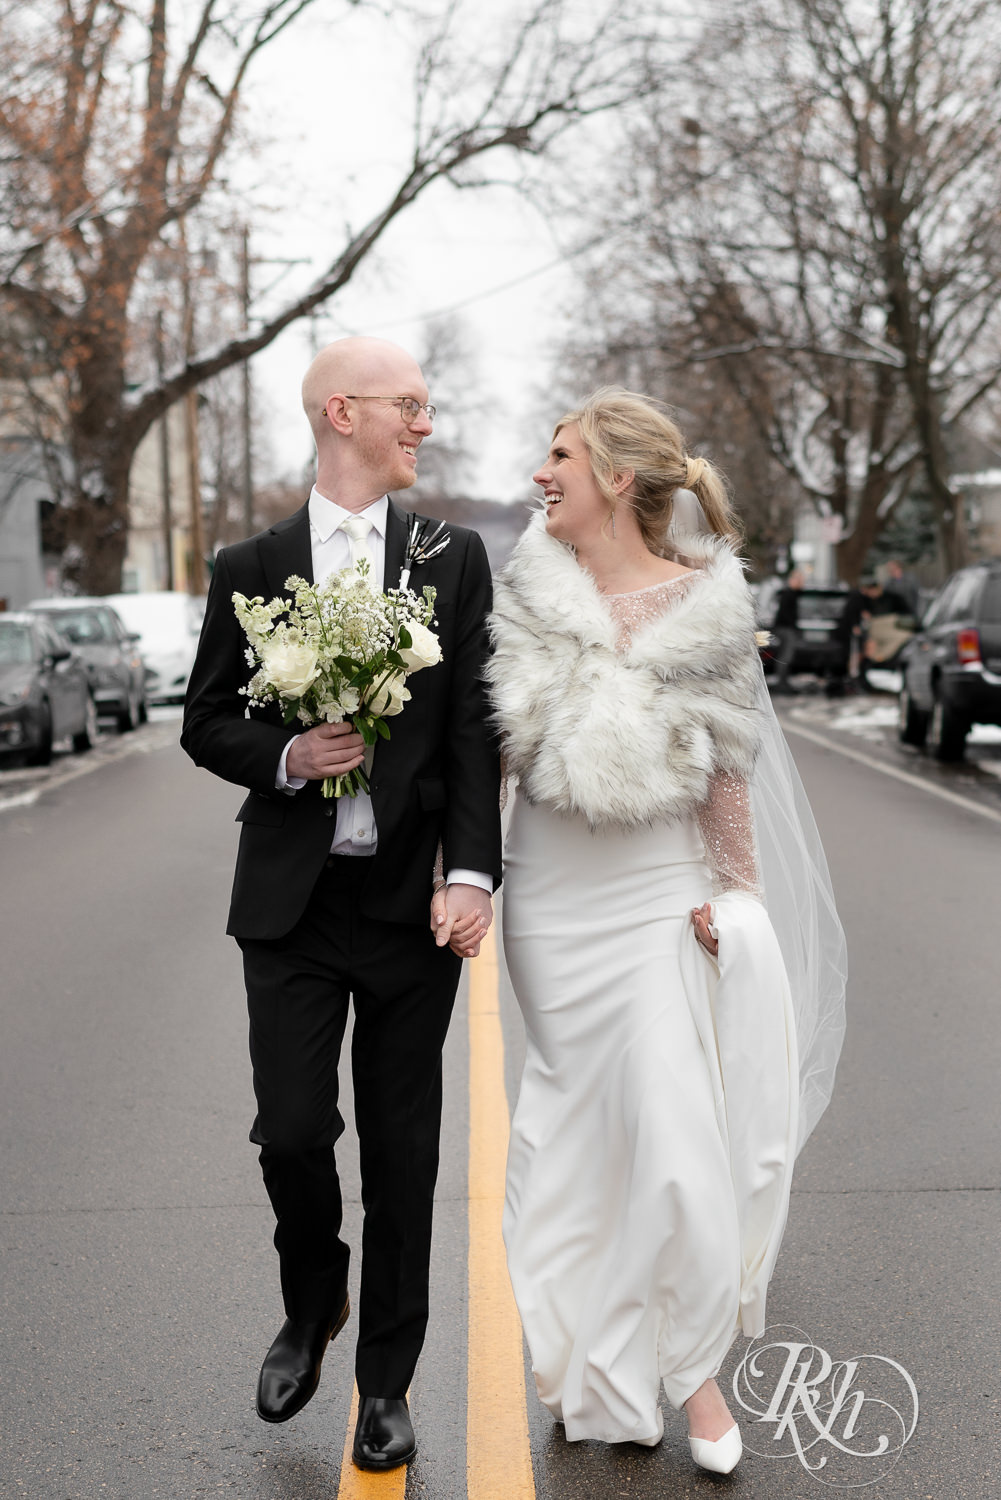 Bride and groom smile walking down the street in Saint Paul, Minnesota on winter wedding day.